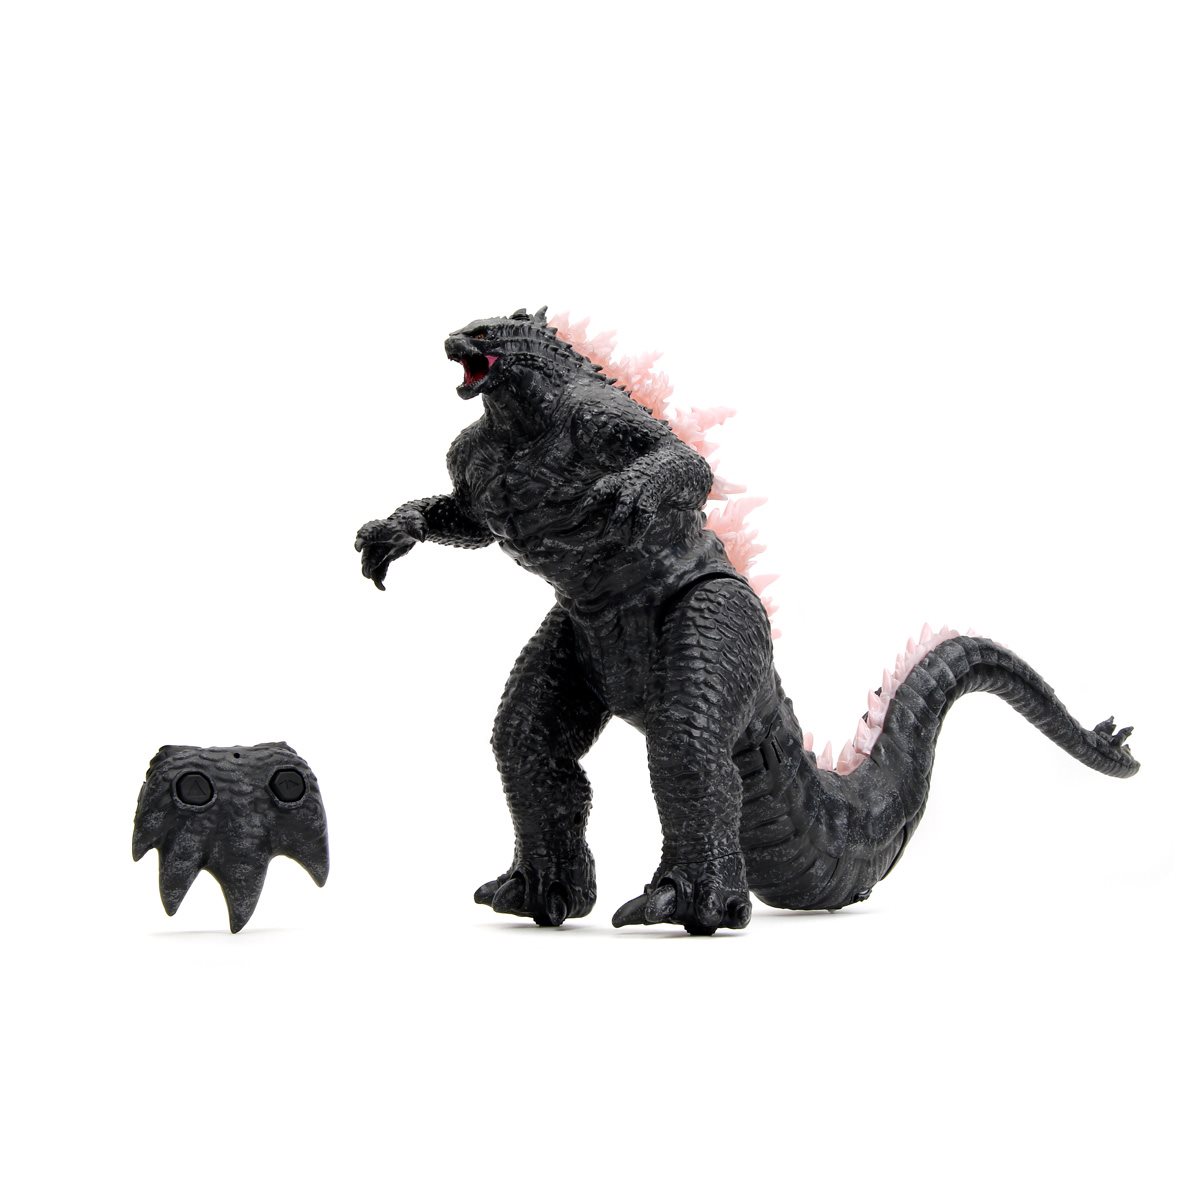 Godzilla x Kong The New Empire Heat-Ray Breath Godzilla Exclusive 12 Remote  Controlled RC Figure Jada Toys - ToyWiz